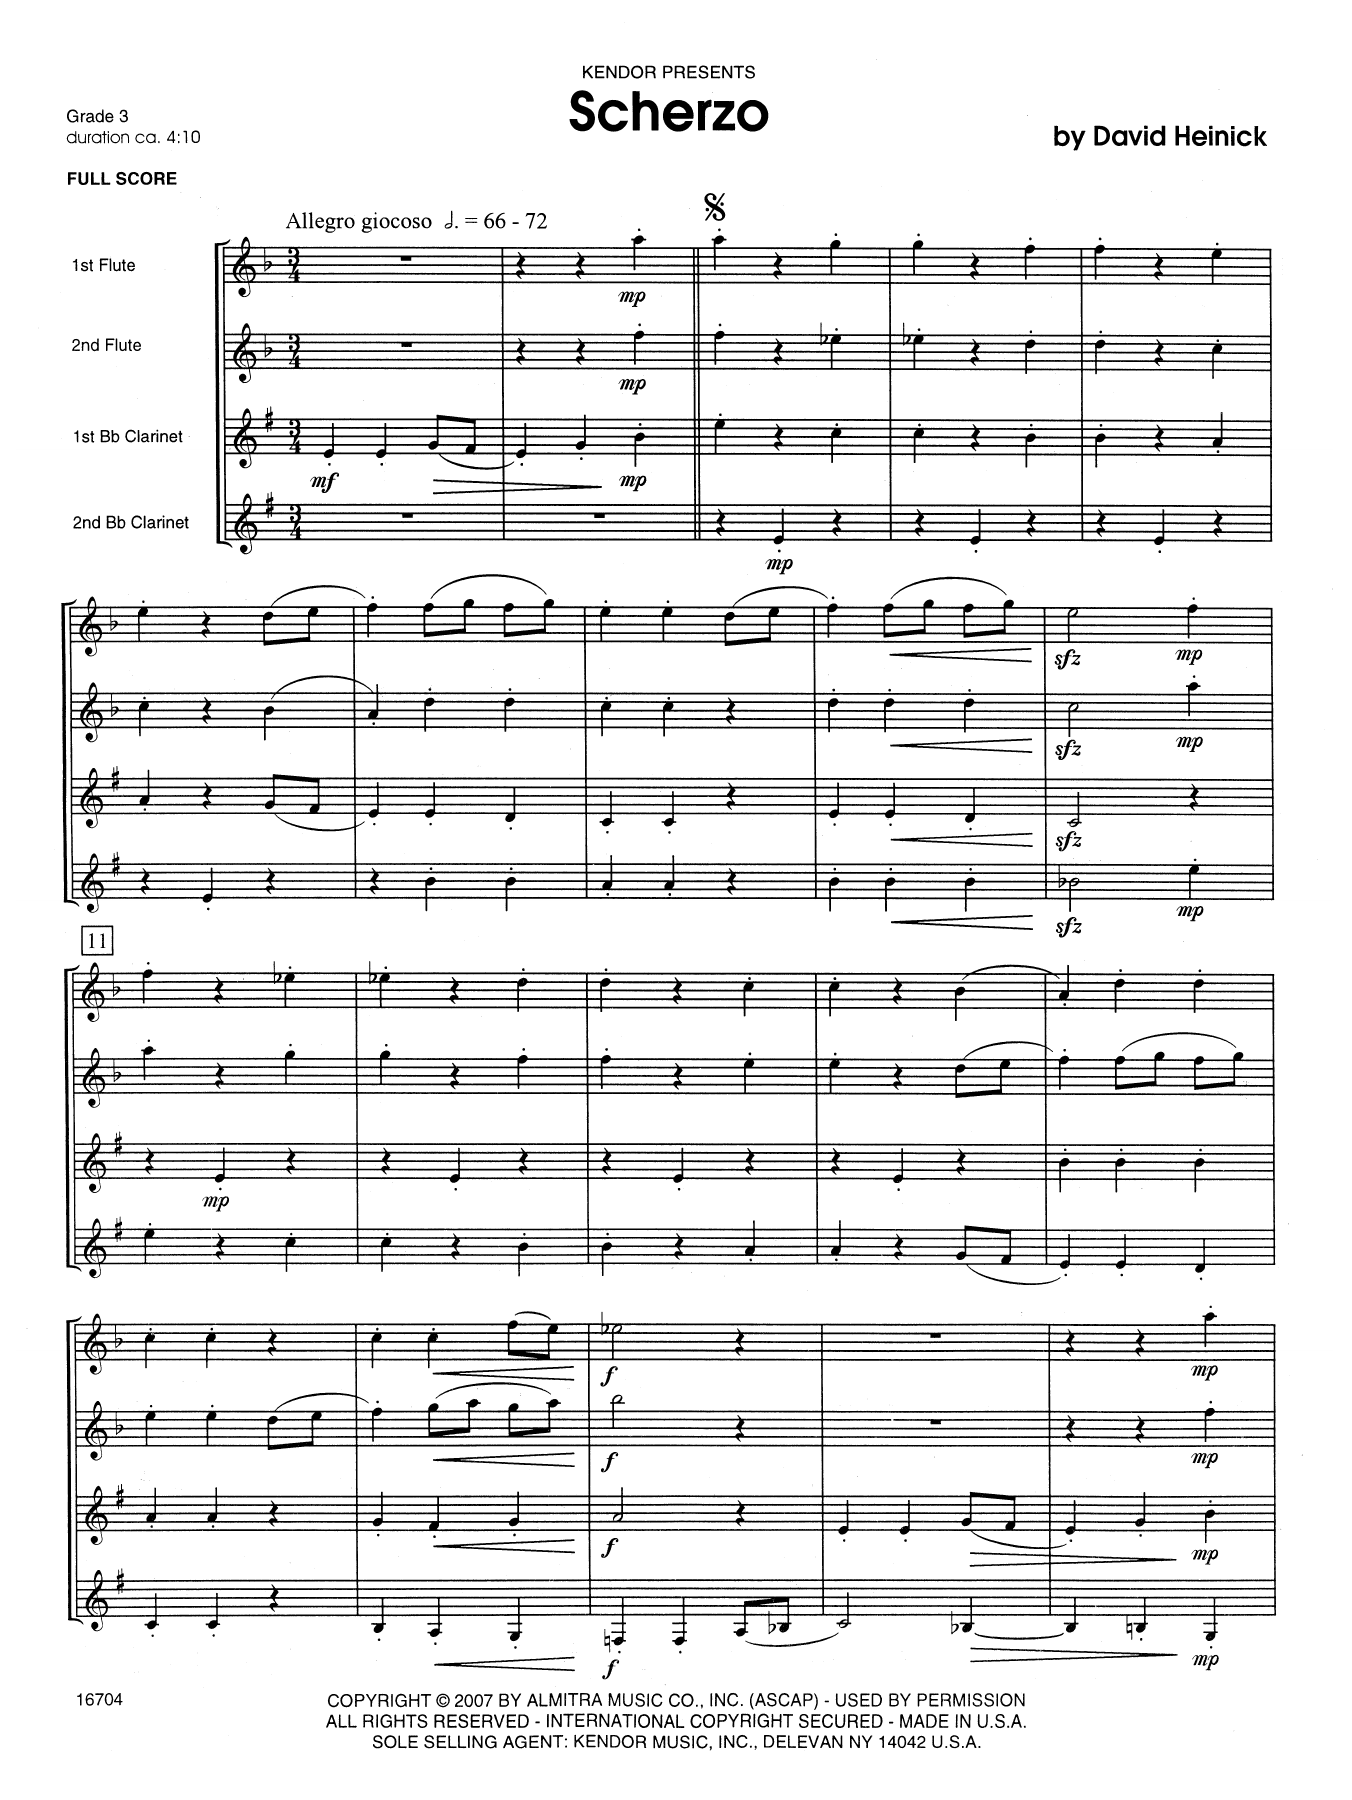 Download David Heinick Scherzo - Full Score Sheet Music